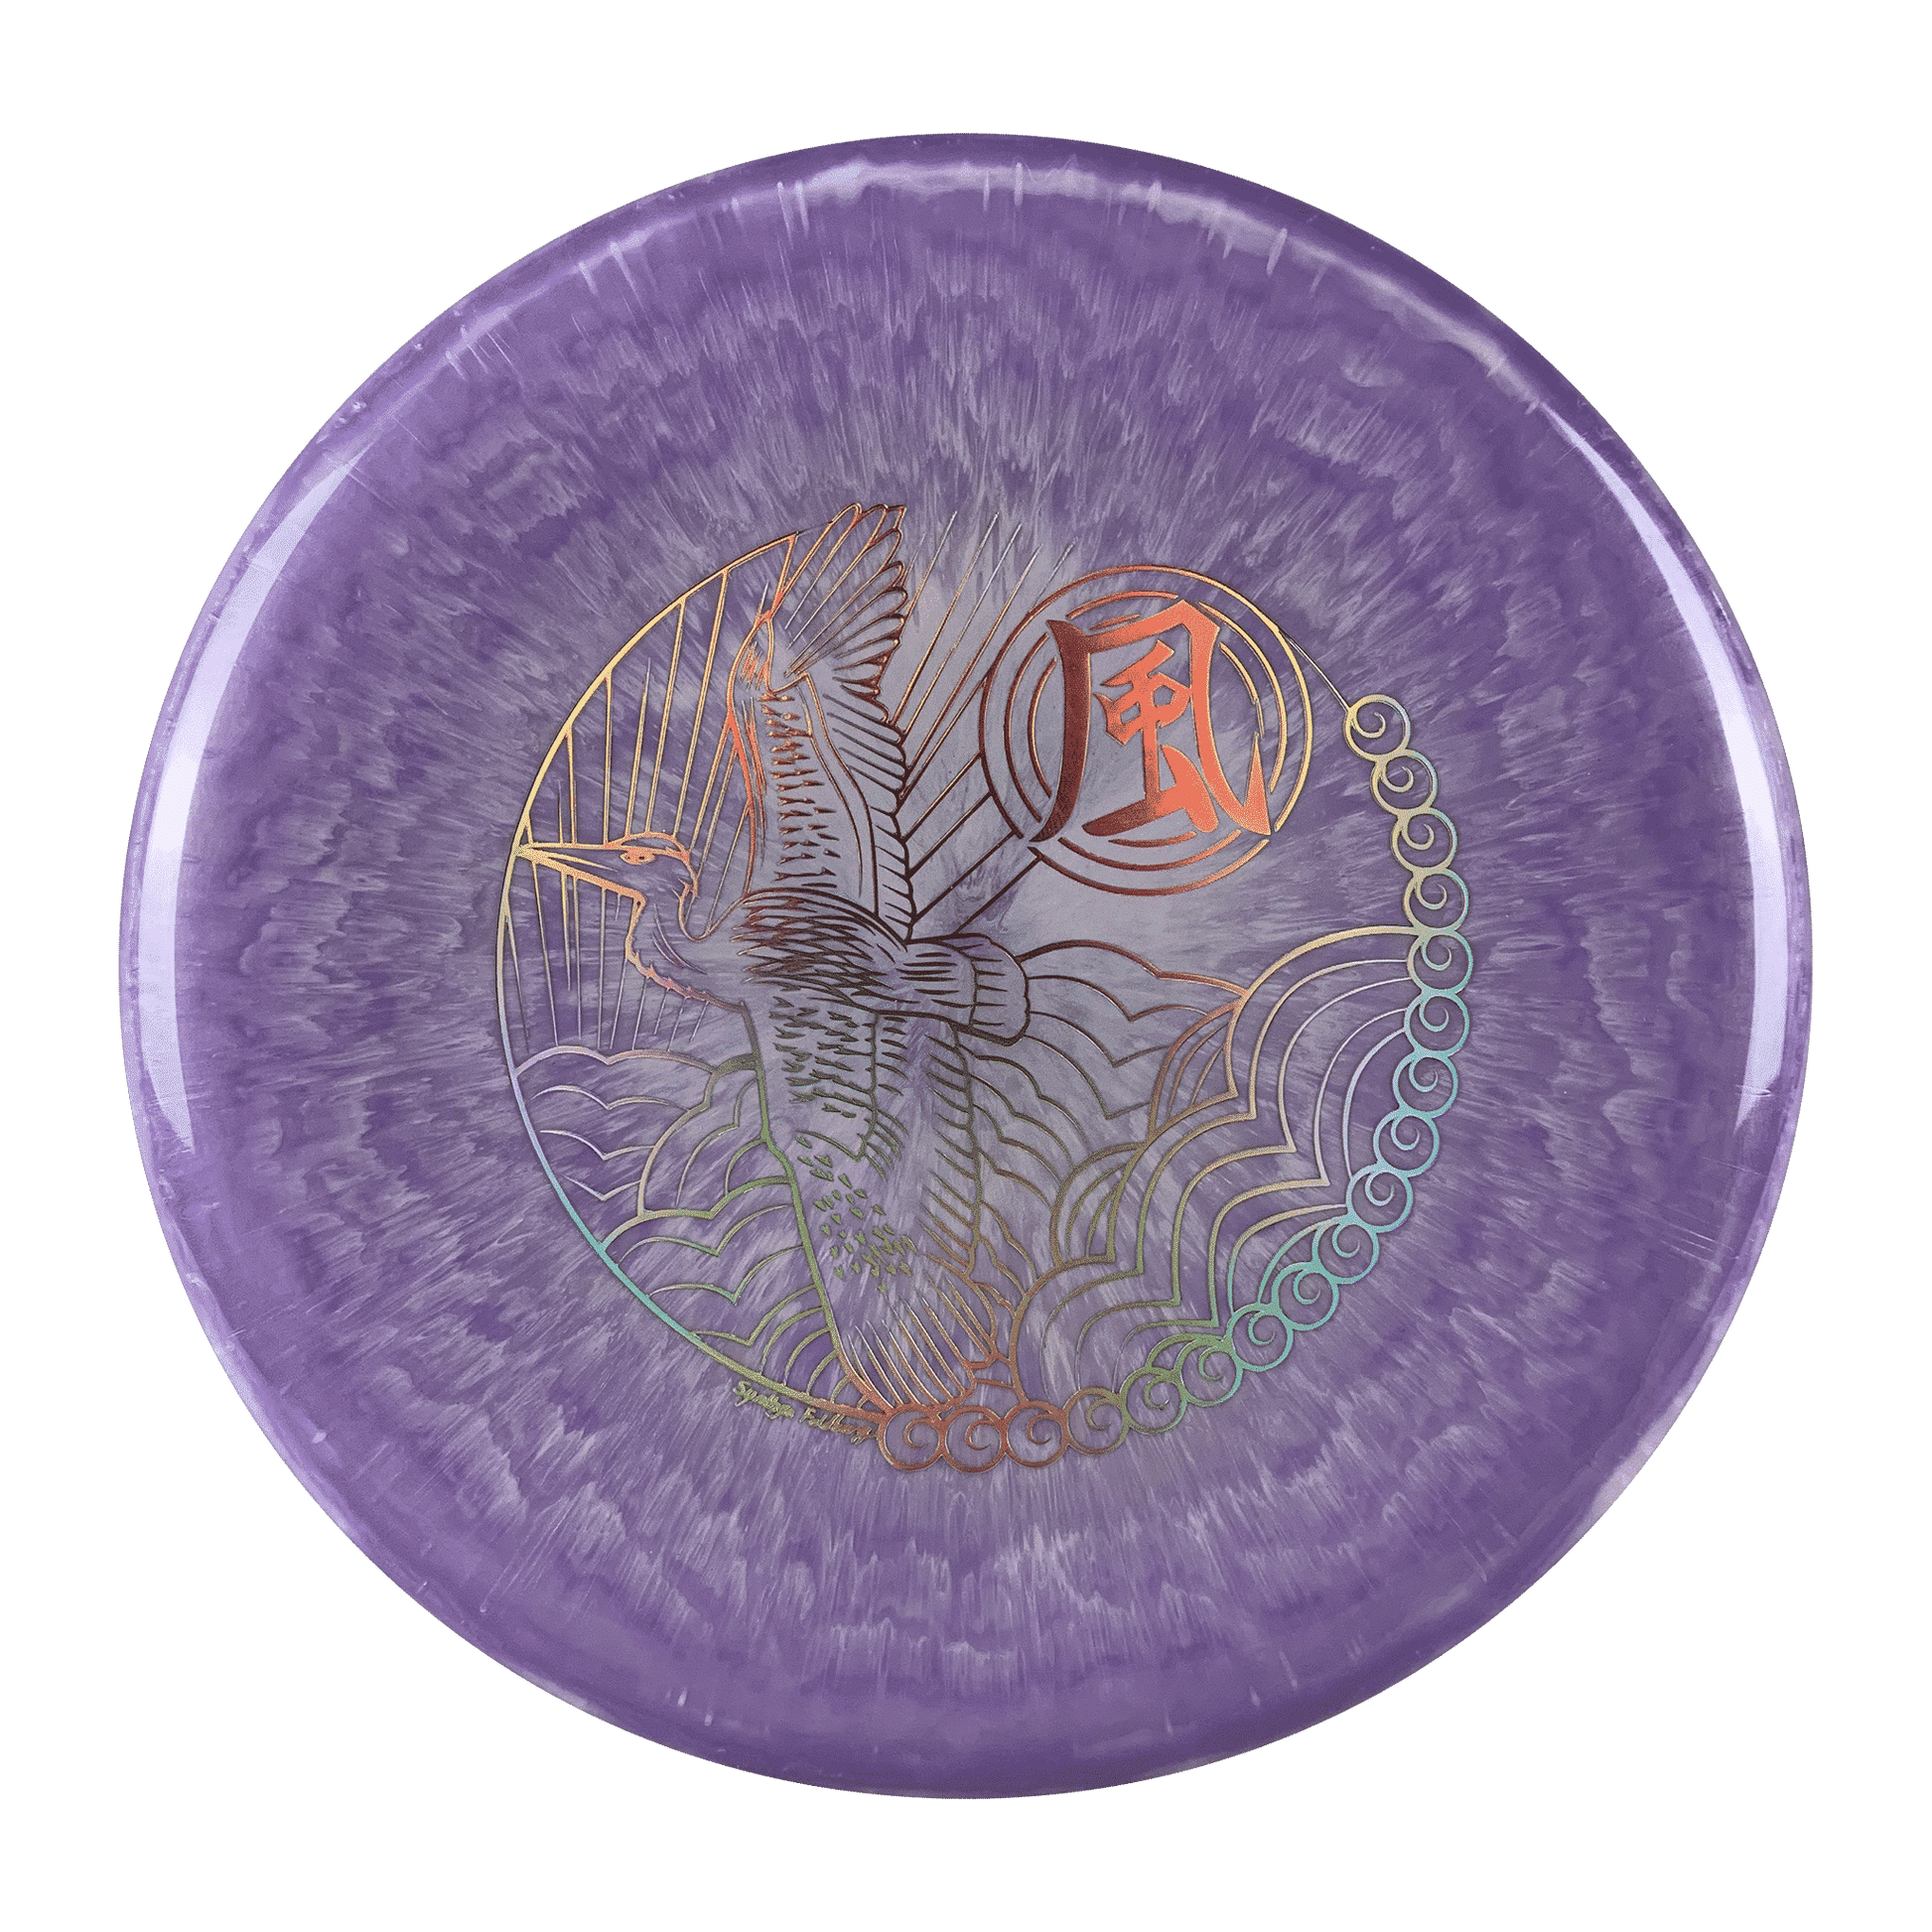 500 Spectrum PA-5 - Crane Stamp Disc Prodigy Multi / Purple 171 